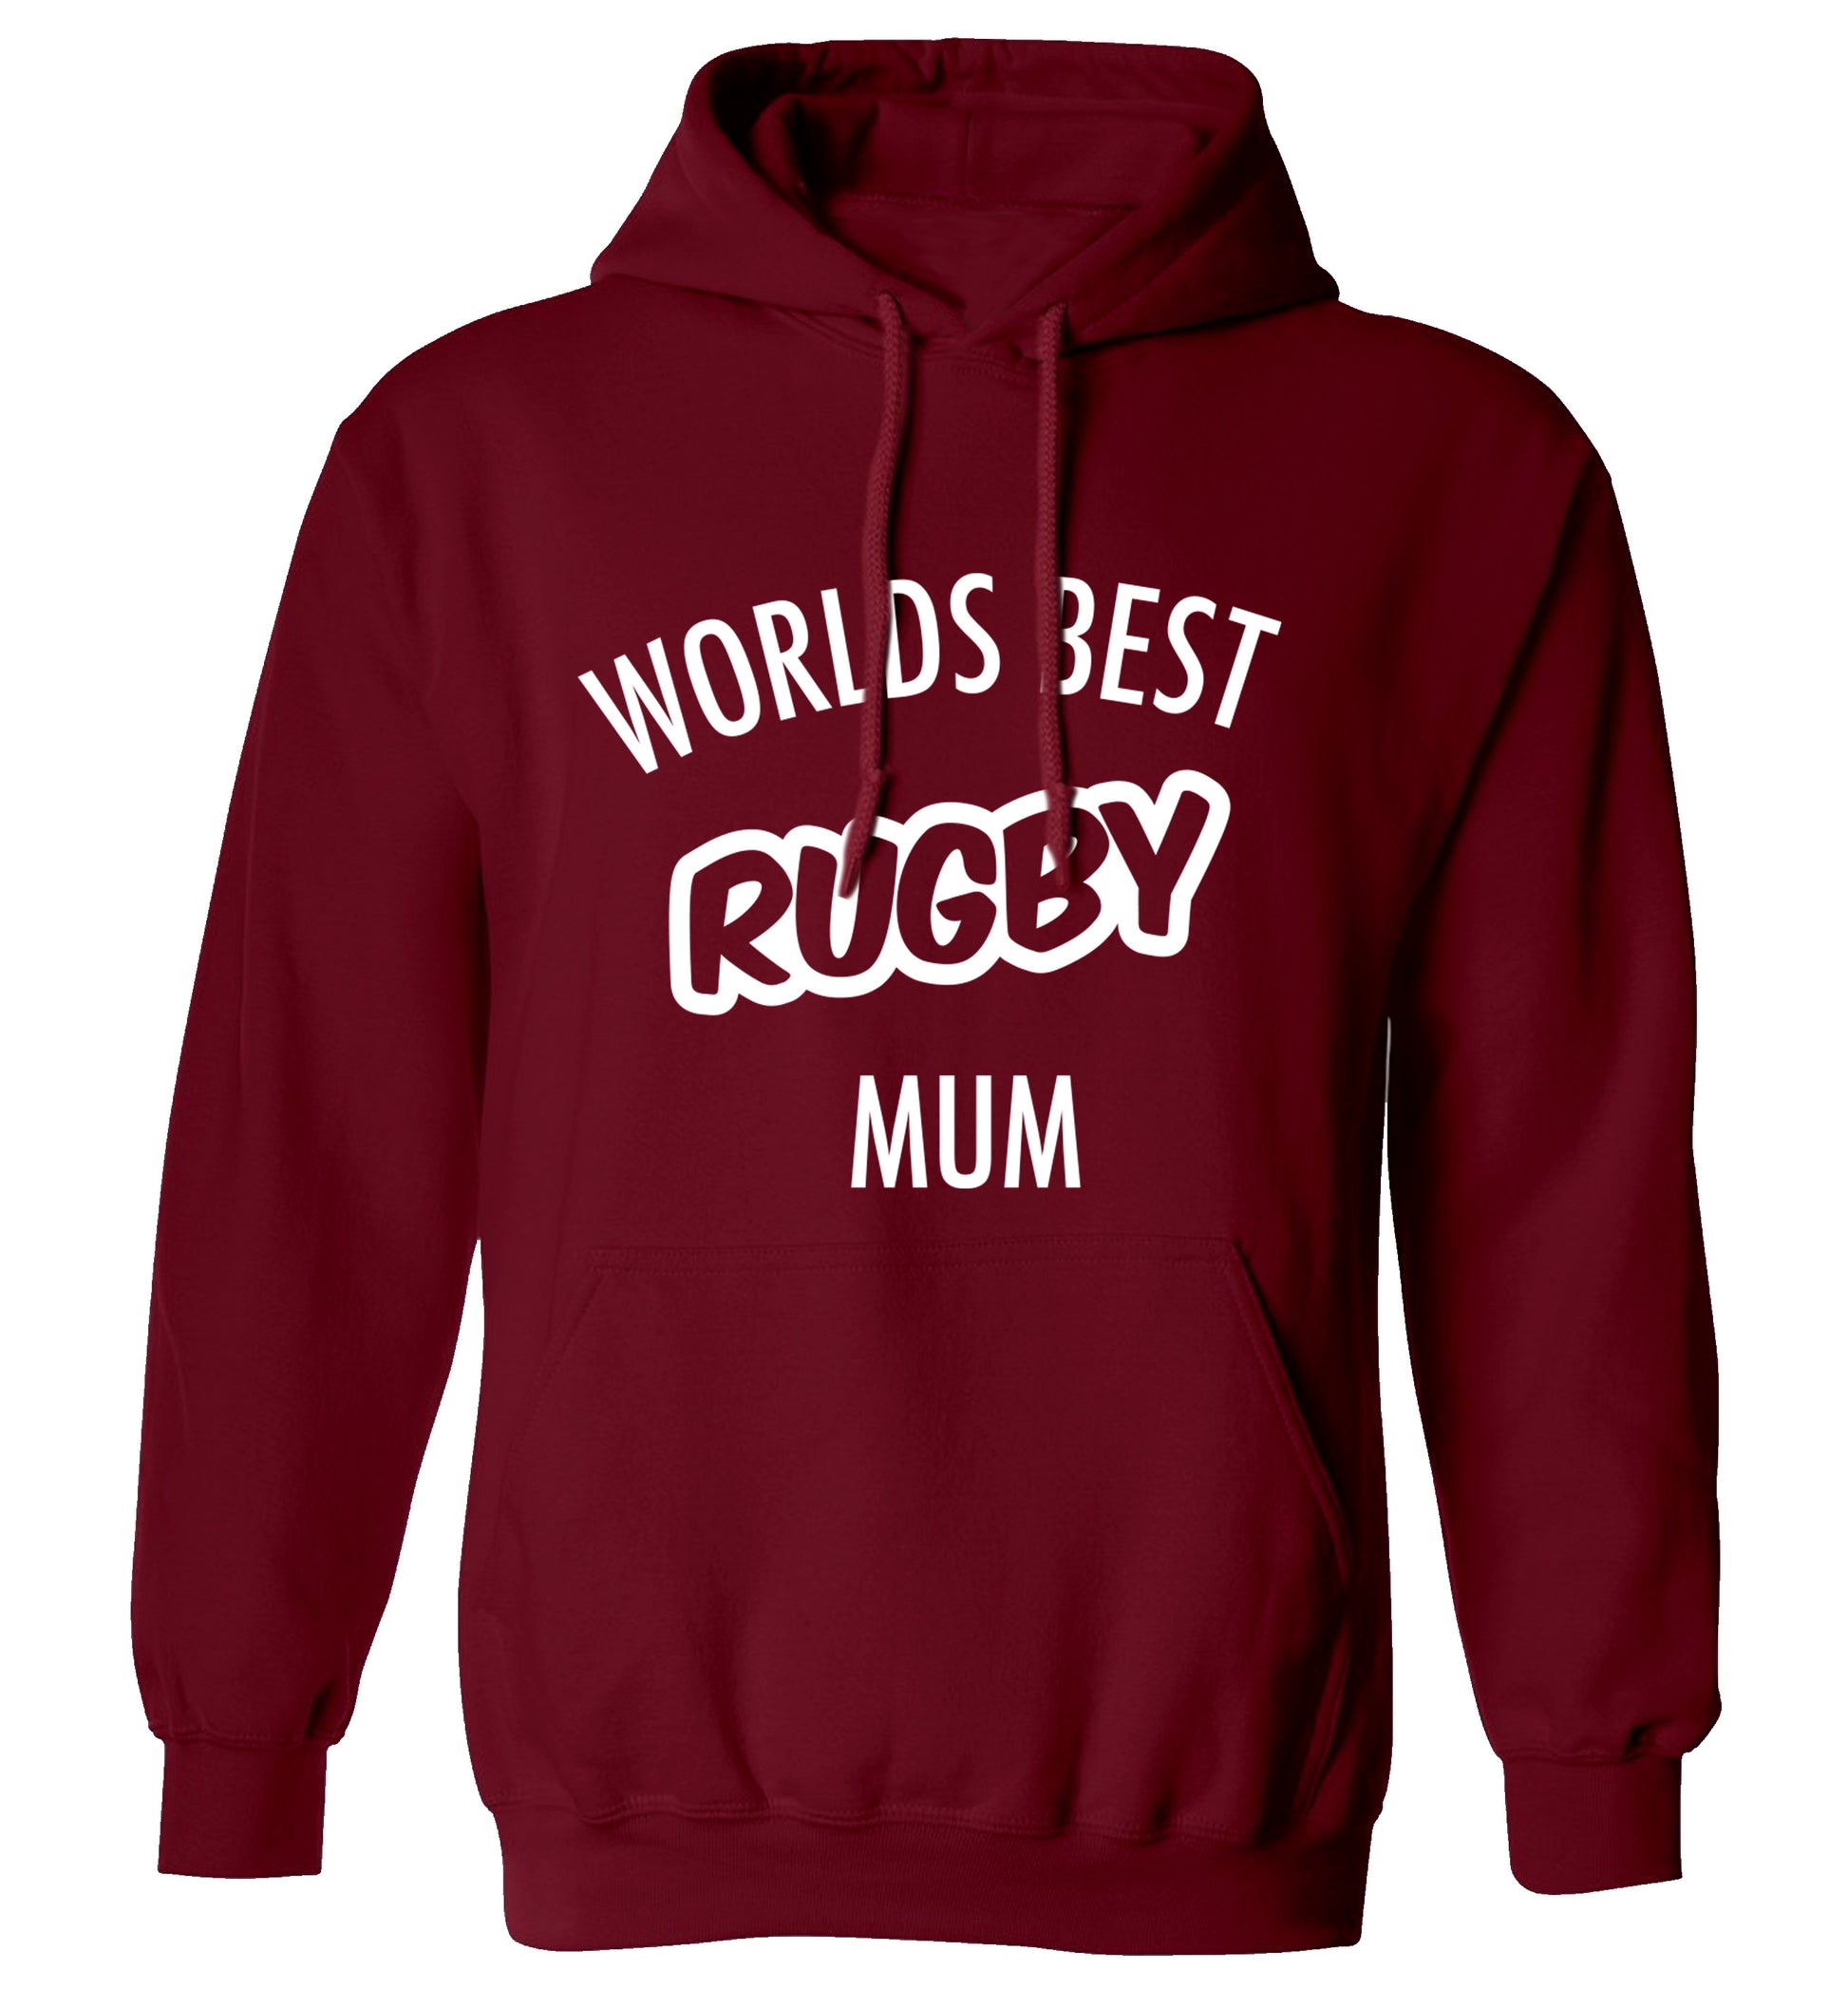 Worlds best rugby mum adults unisex maroon hoodie 2XL